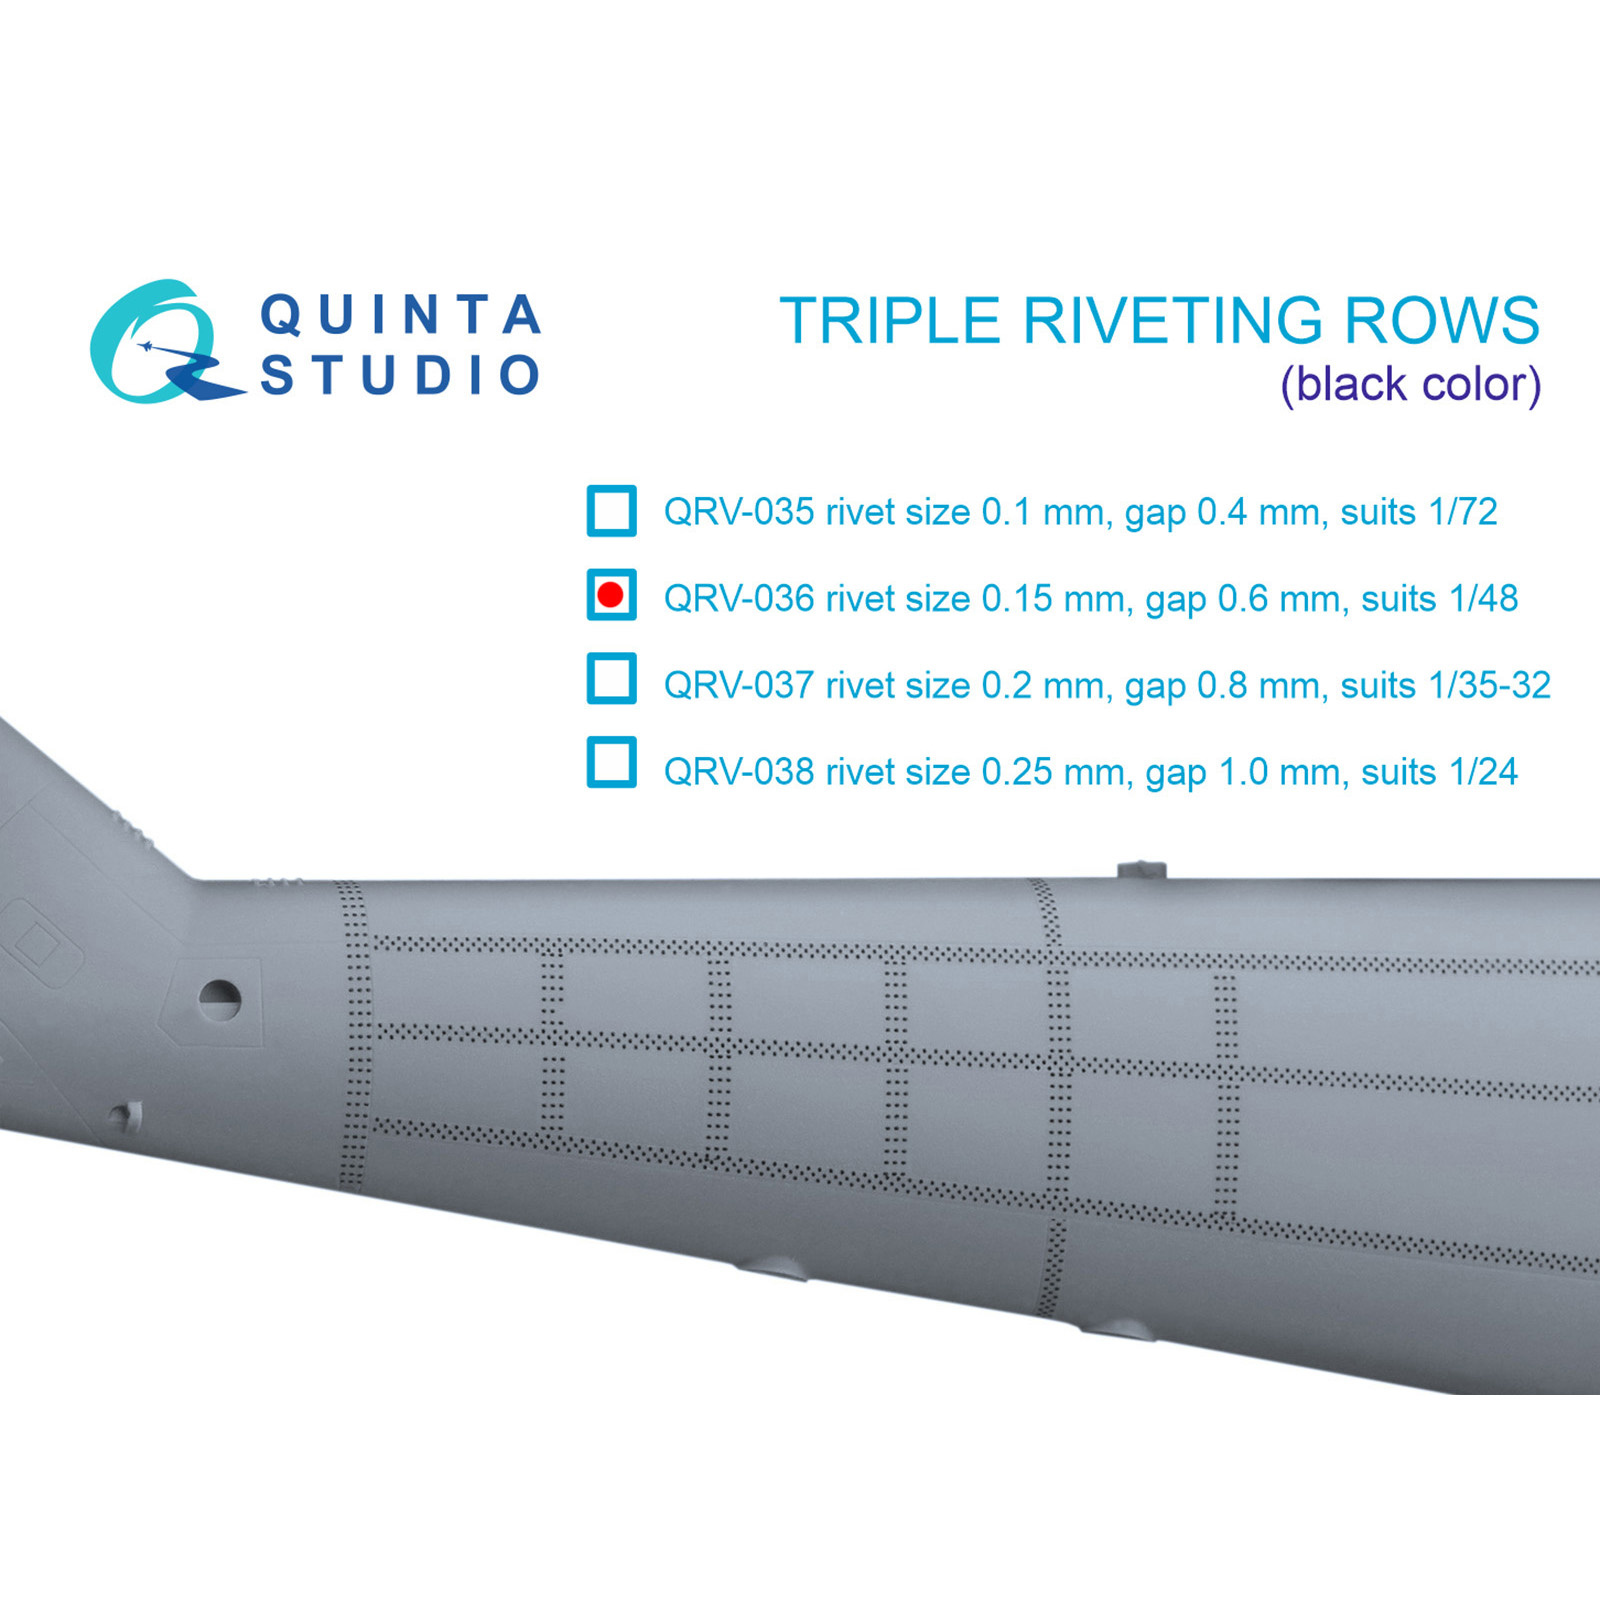 QRV-036 Quinta Studio 1/48 Triple riveting rows (riveting size 0.15 mm, interval 0.6 mm), black, total length 4.4 m